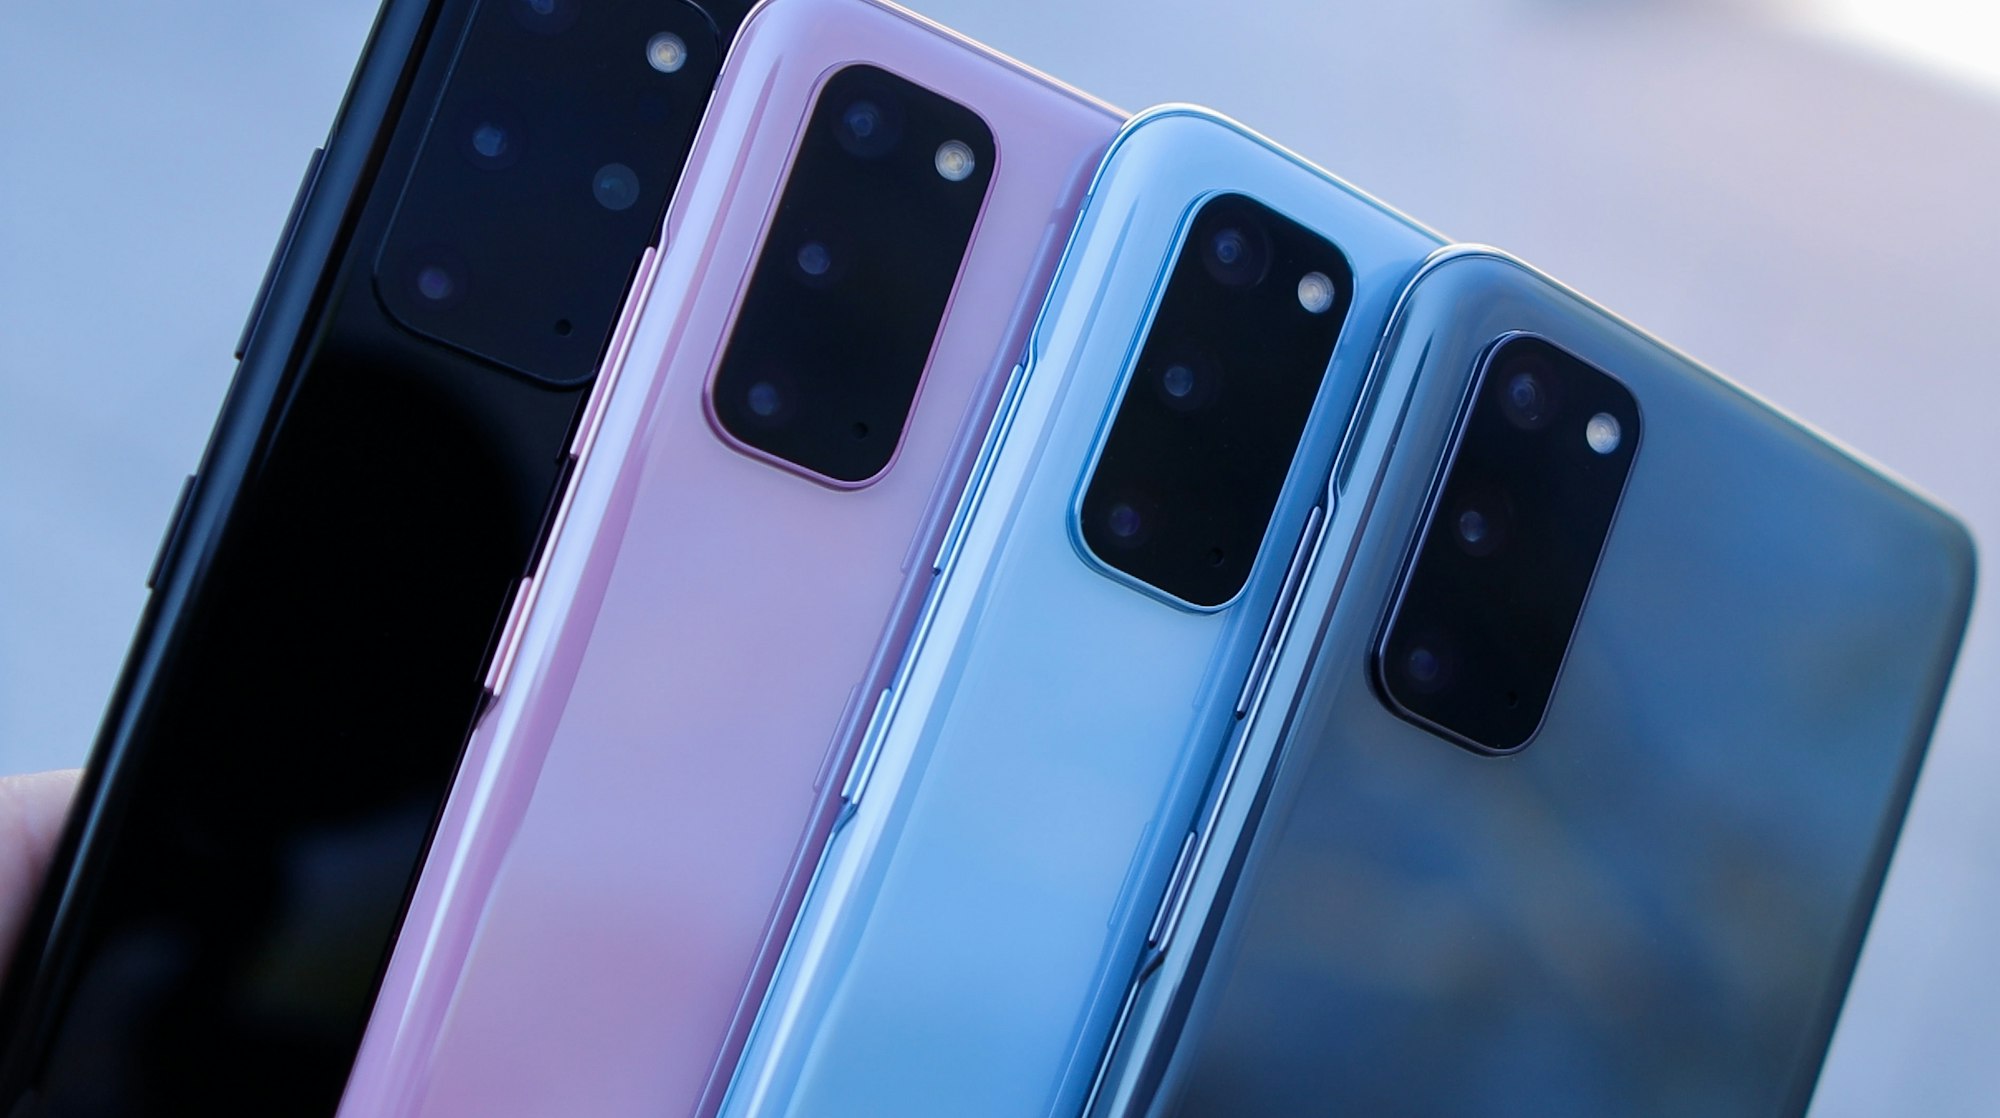 Samsung’s smartphone sales grew 9% YoY in April 2022